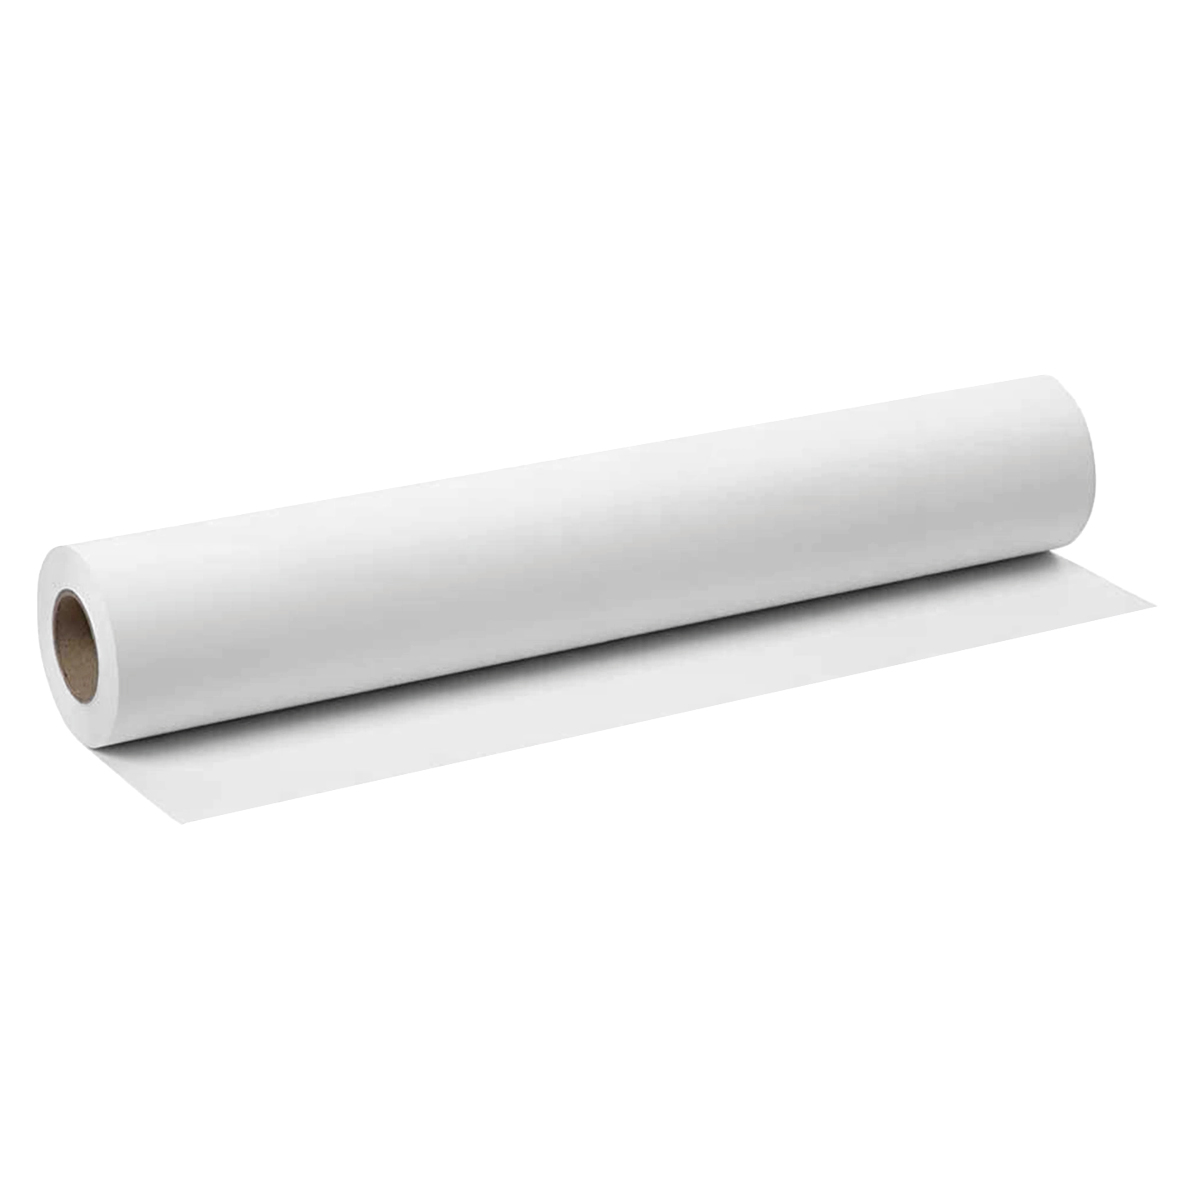 Drawing Paper Roll 80g 0.62 x 25 m